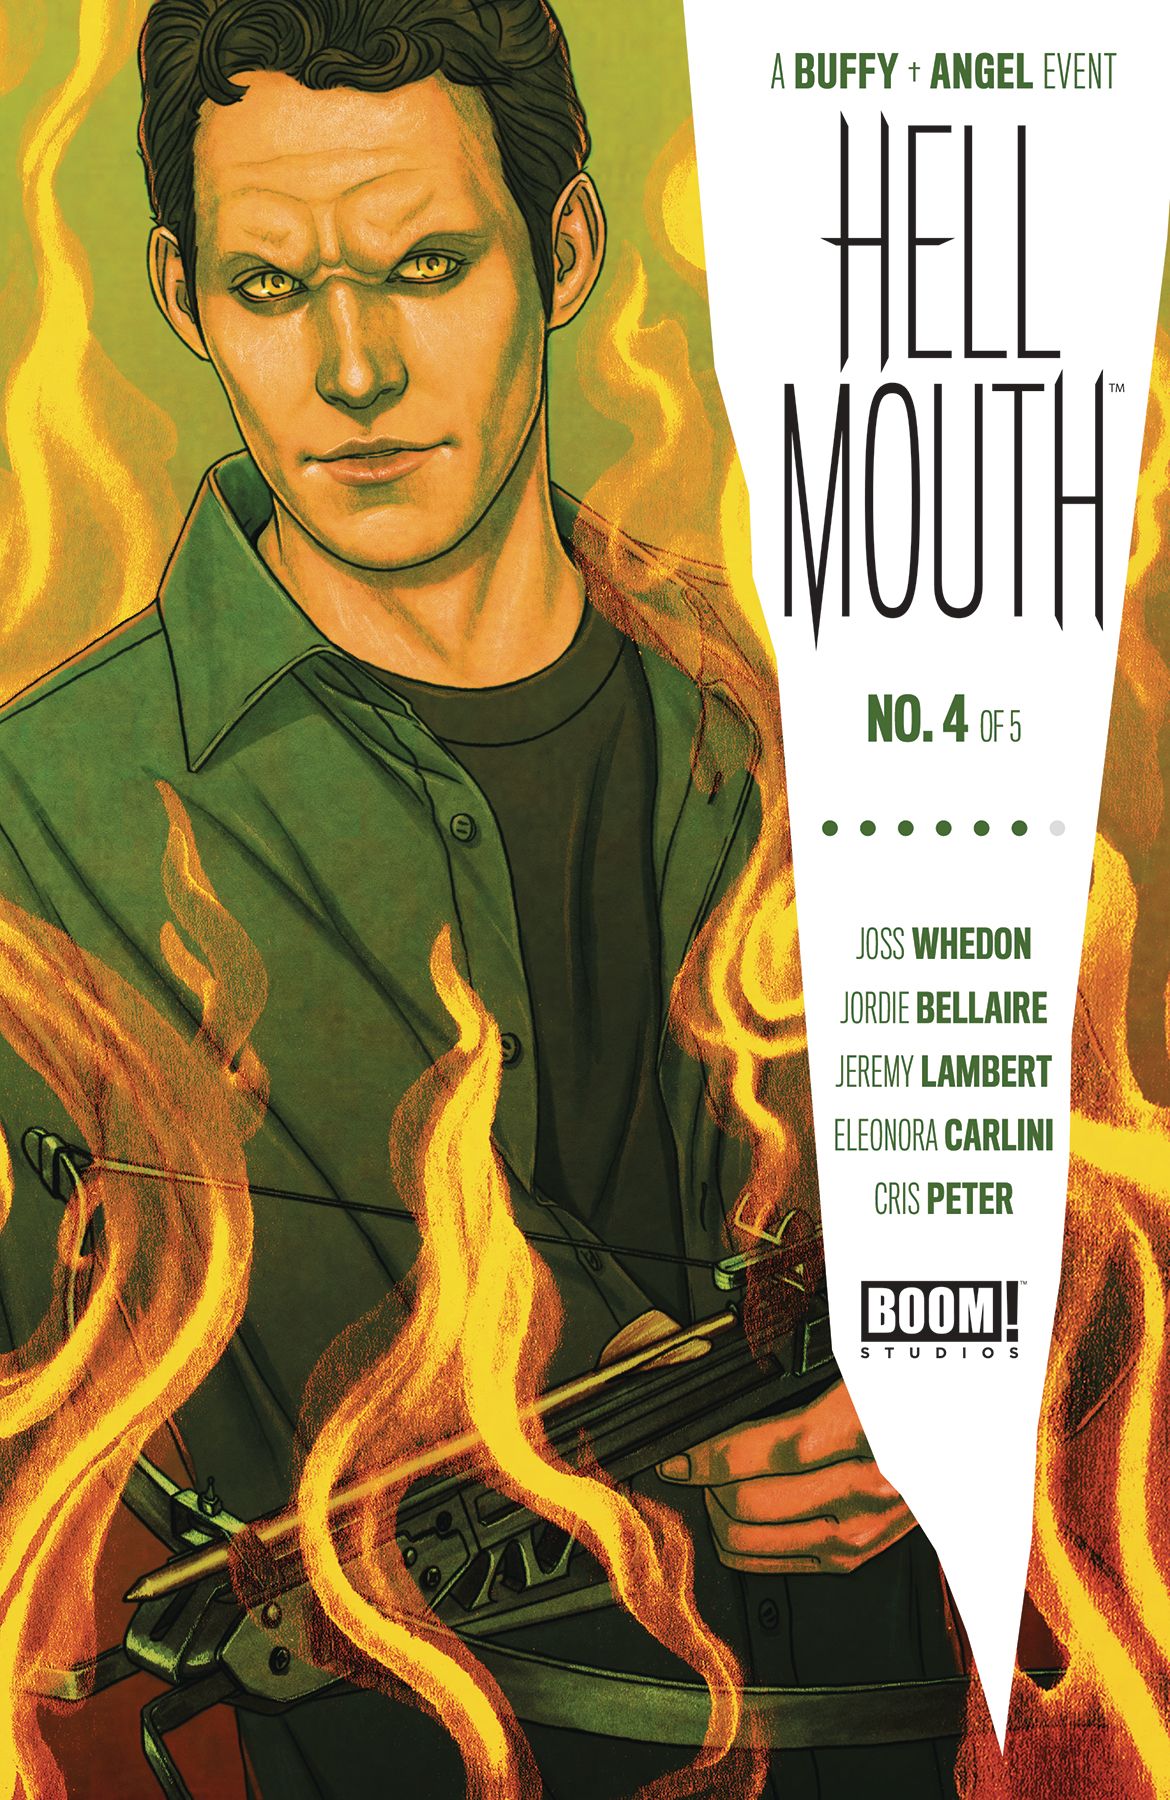 Buffy the Vampire Slayer / Angel: Hellmouth #4 Comic